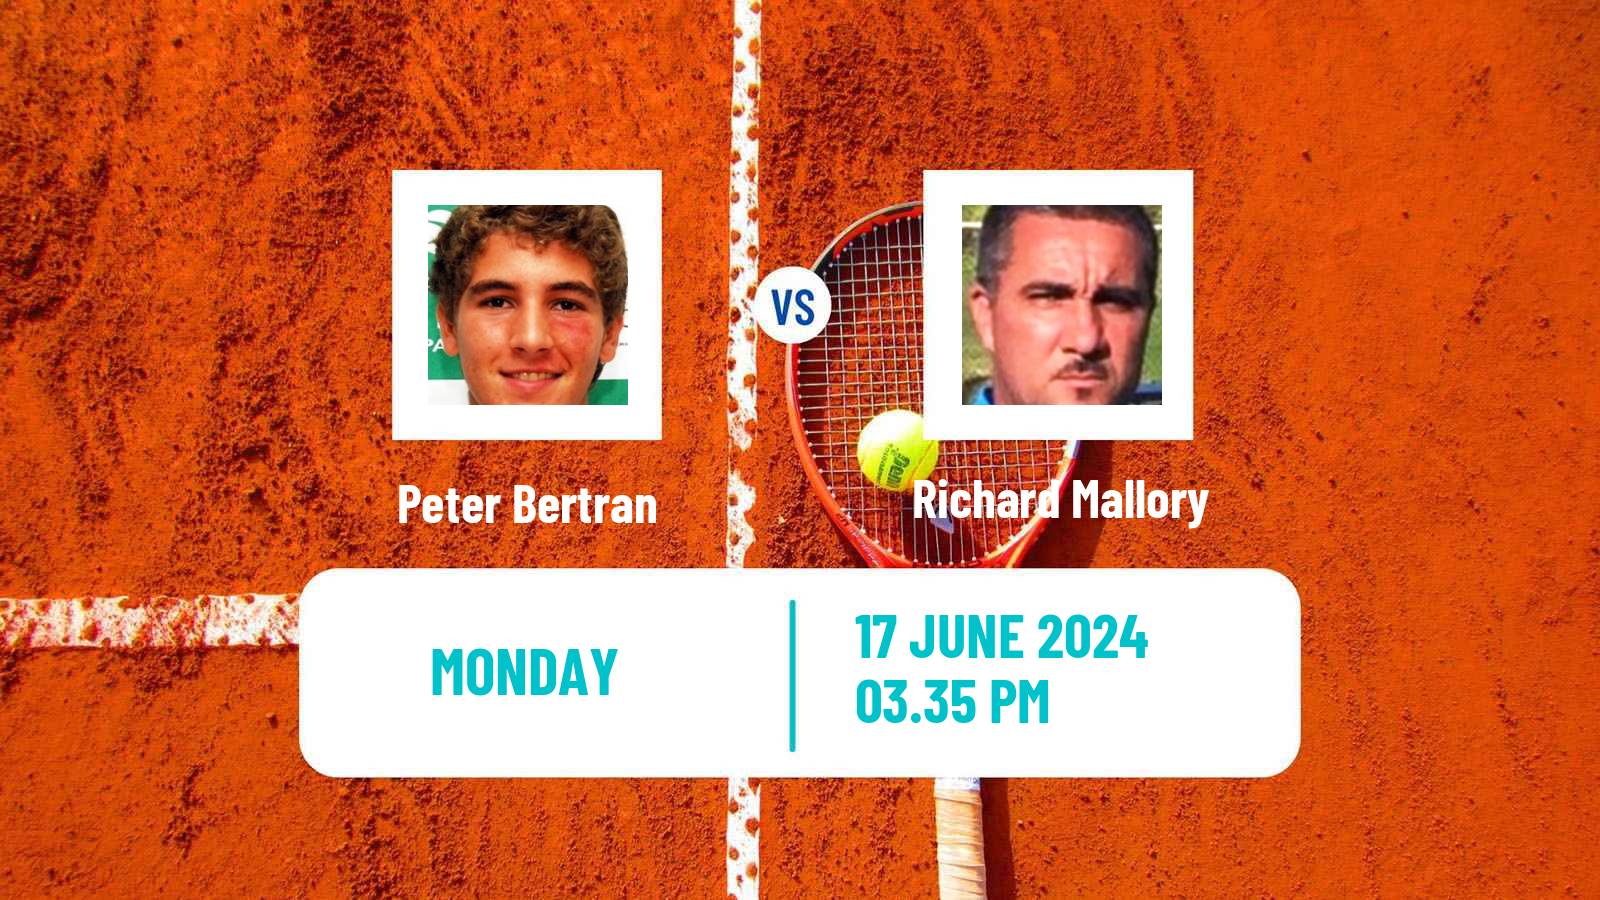 Tennis Davis Cup Group III Peter Bertran - Richard Mallory